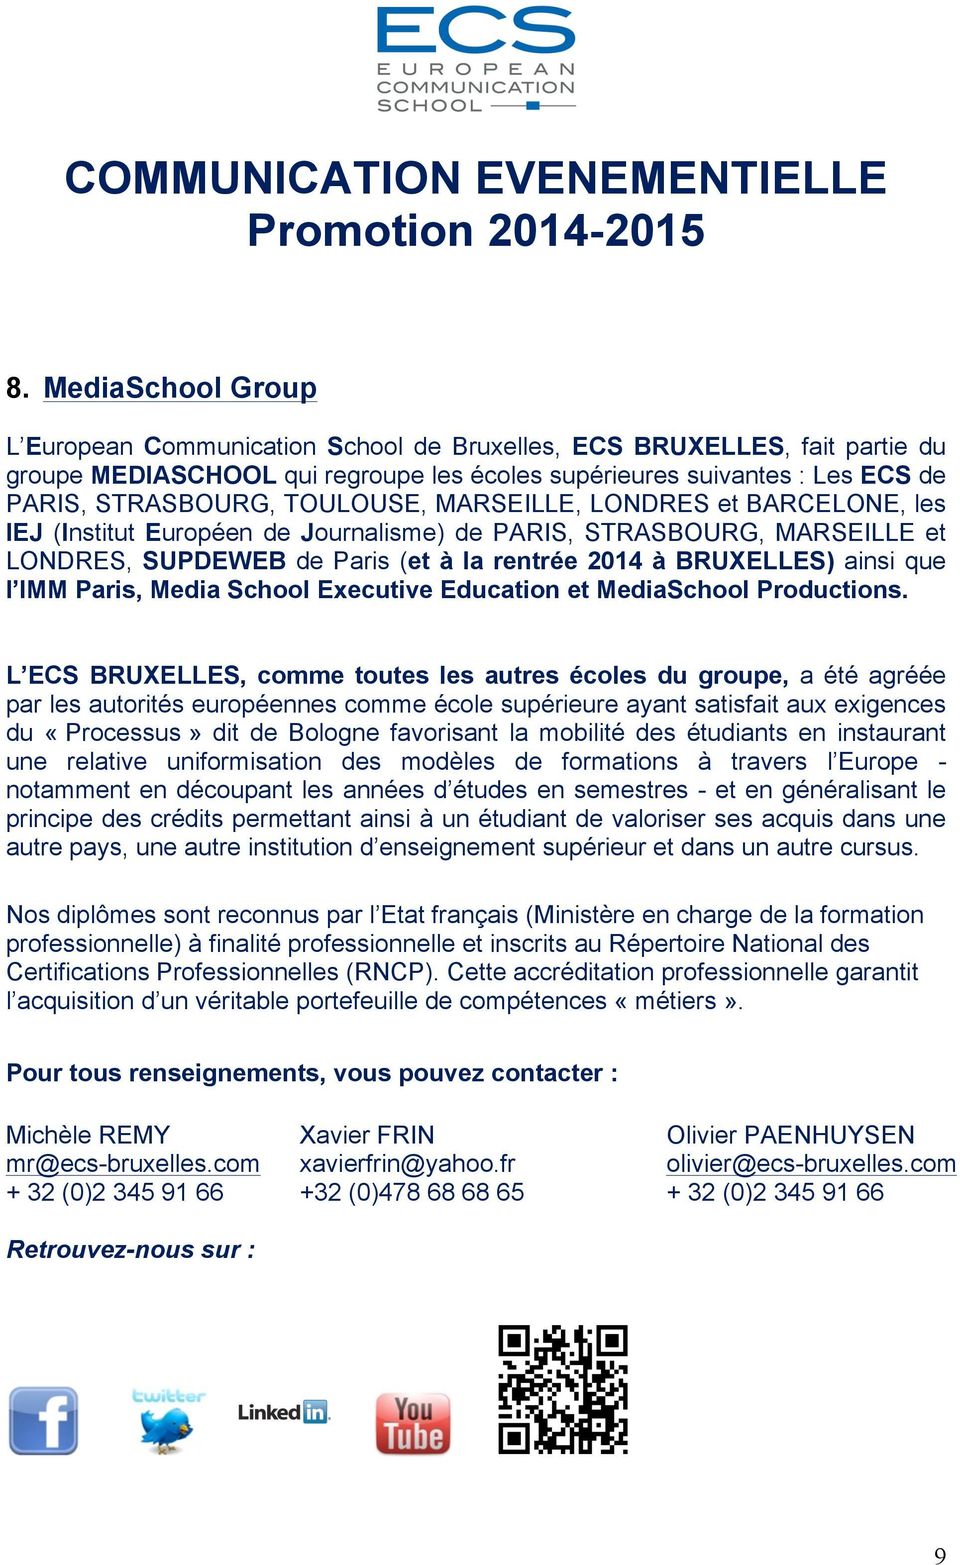 Paris, Media School Executive Education et MediaSchool Productions.